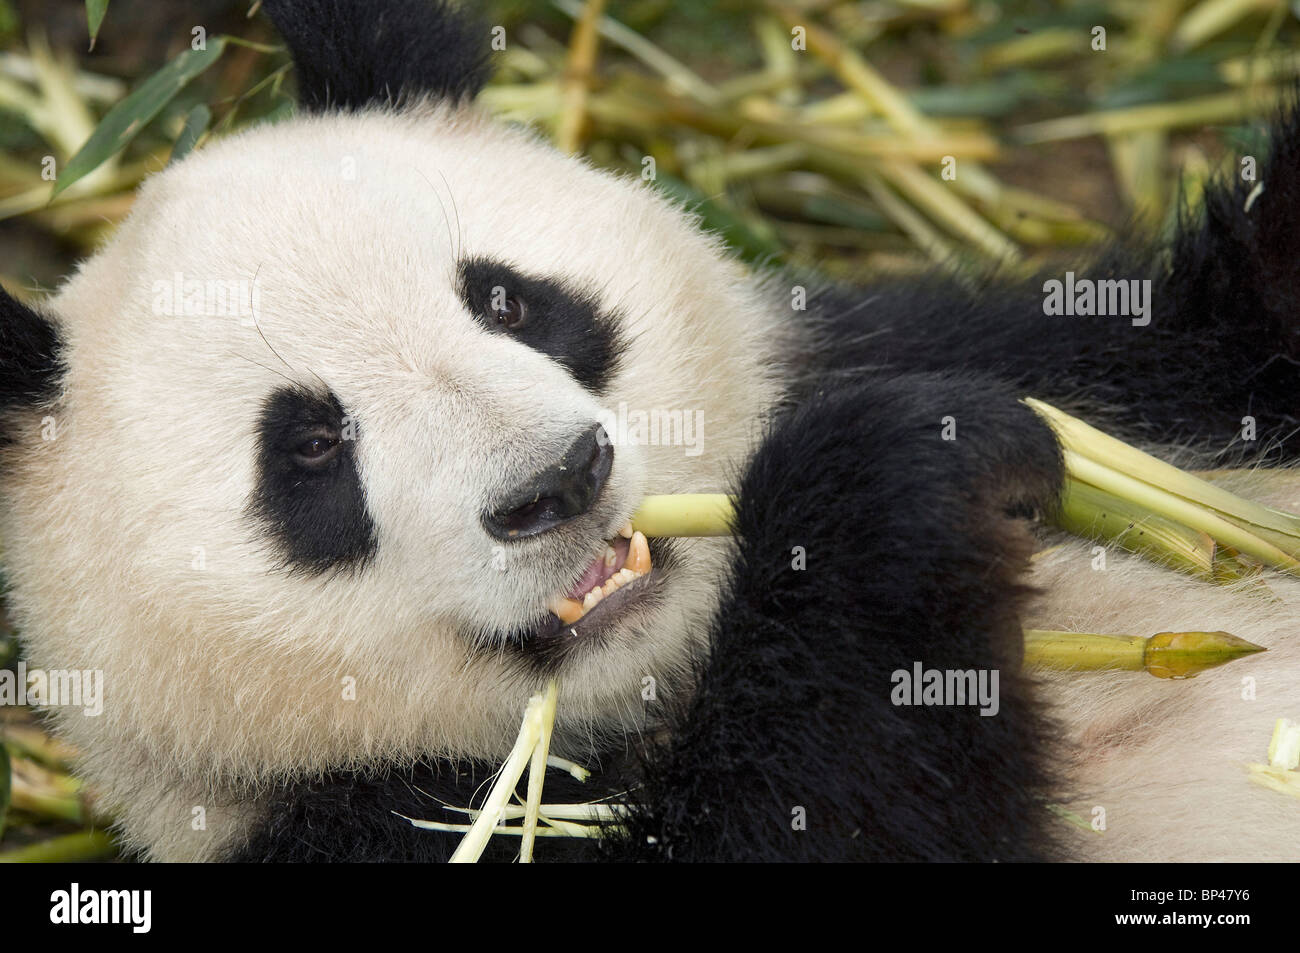 Giant panda feeding on bamboo stem Sichuan Province, China. Stock Photo